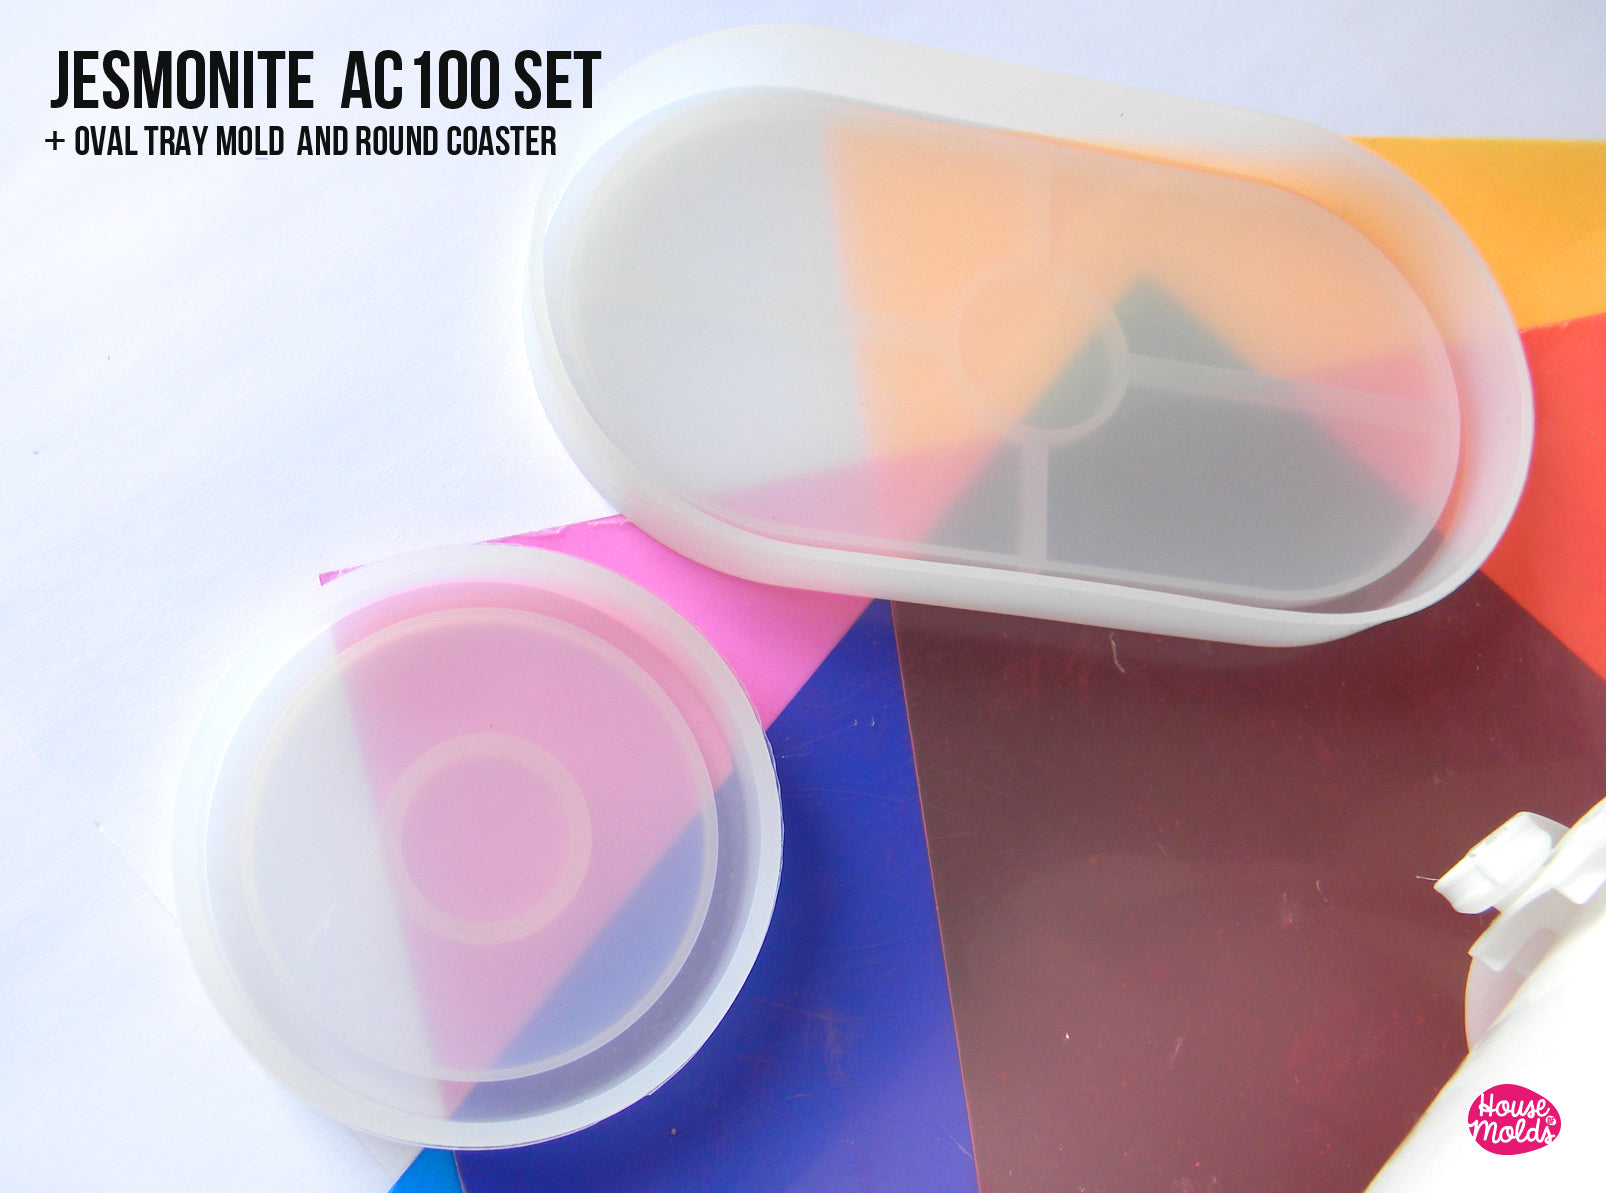 Jesmonite AC100 Water Based Casting Resin 35kg Kit : : Home